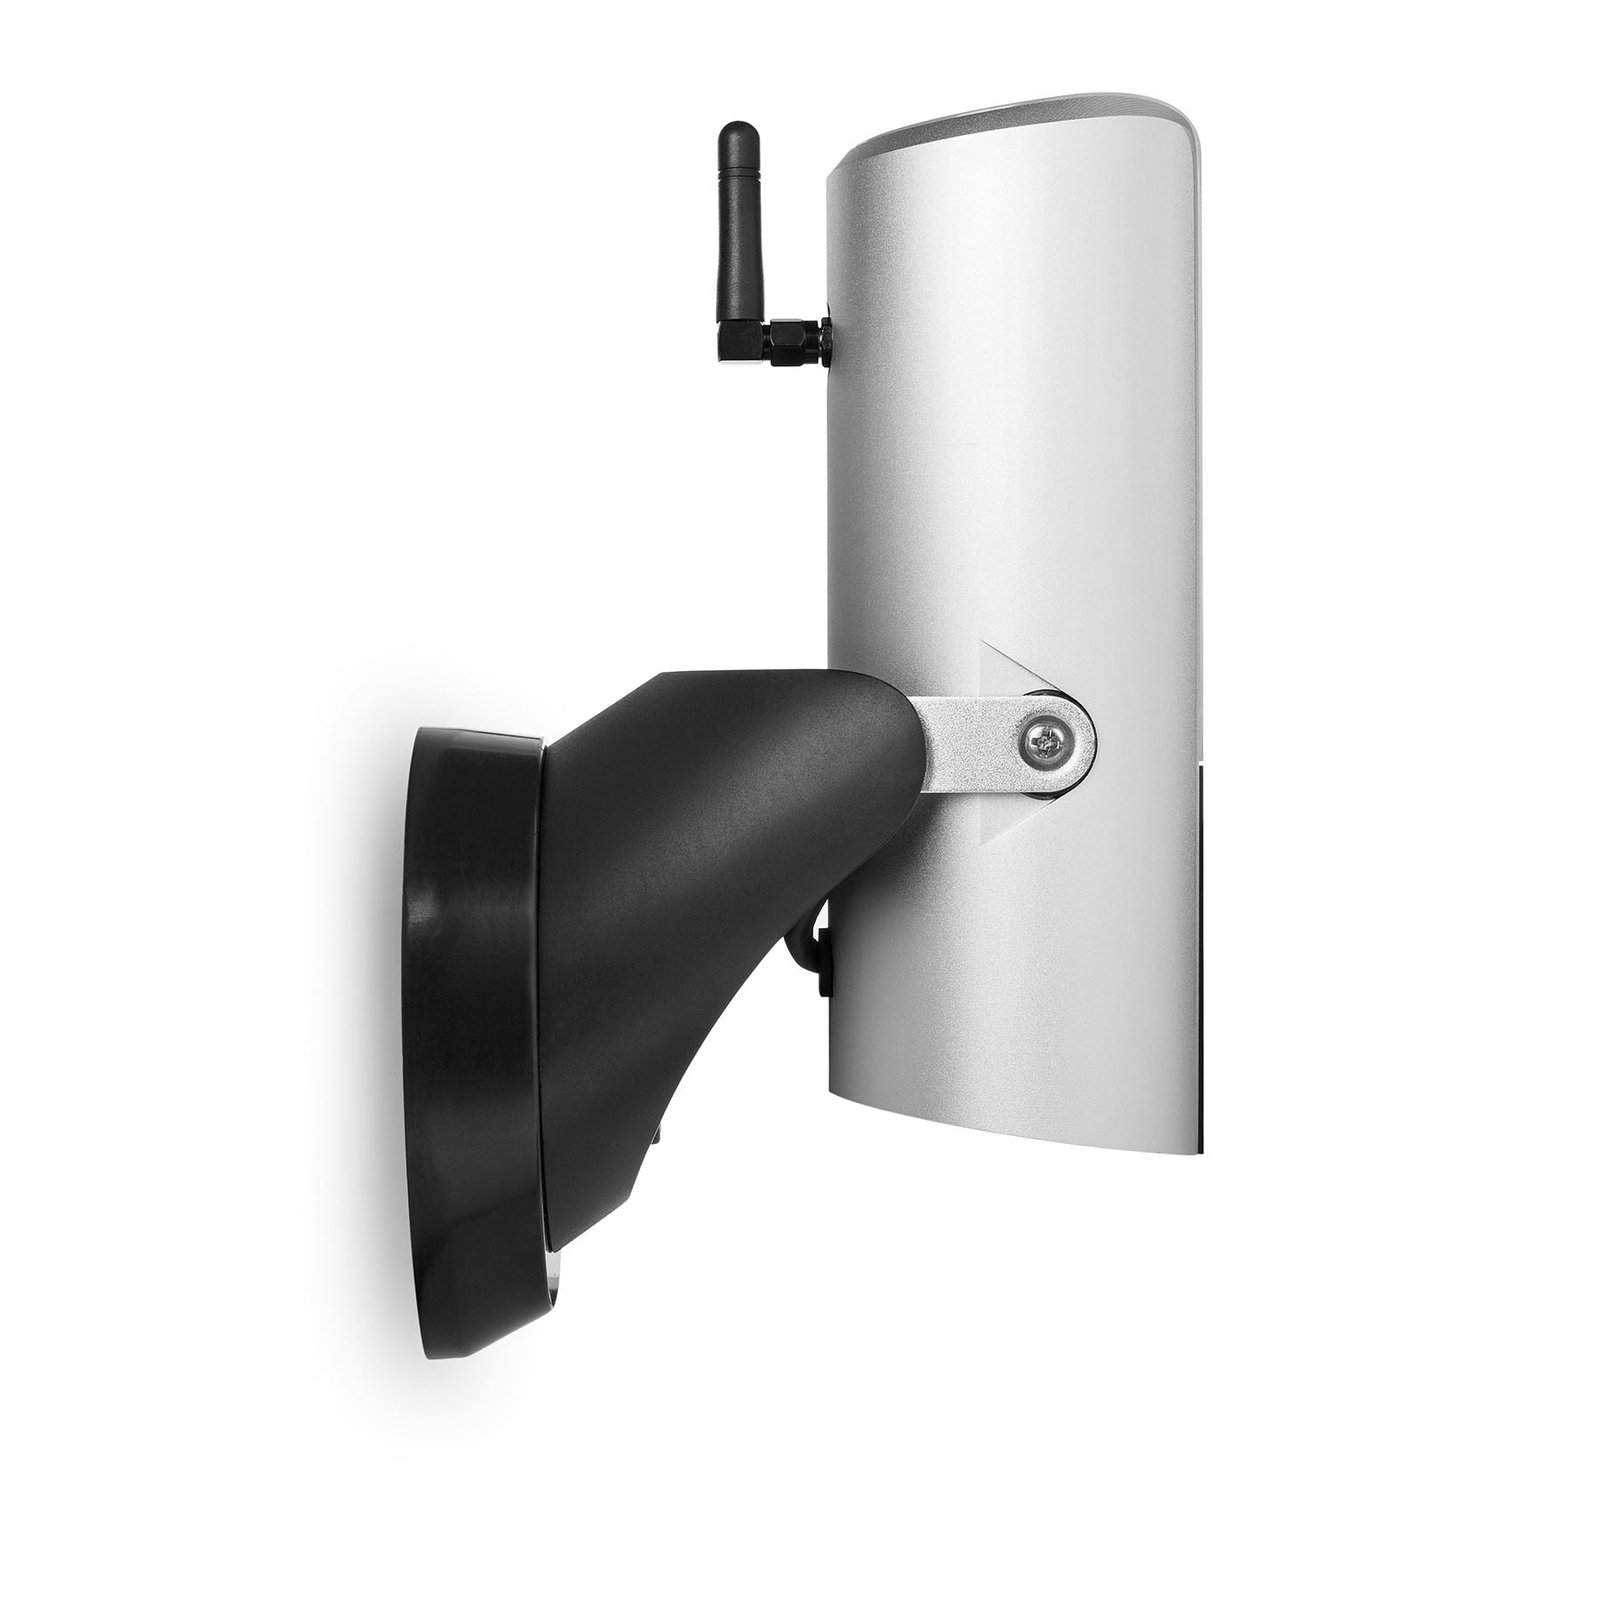 Guardian surveillance camera with LED light